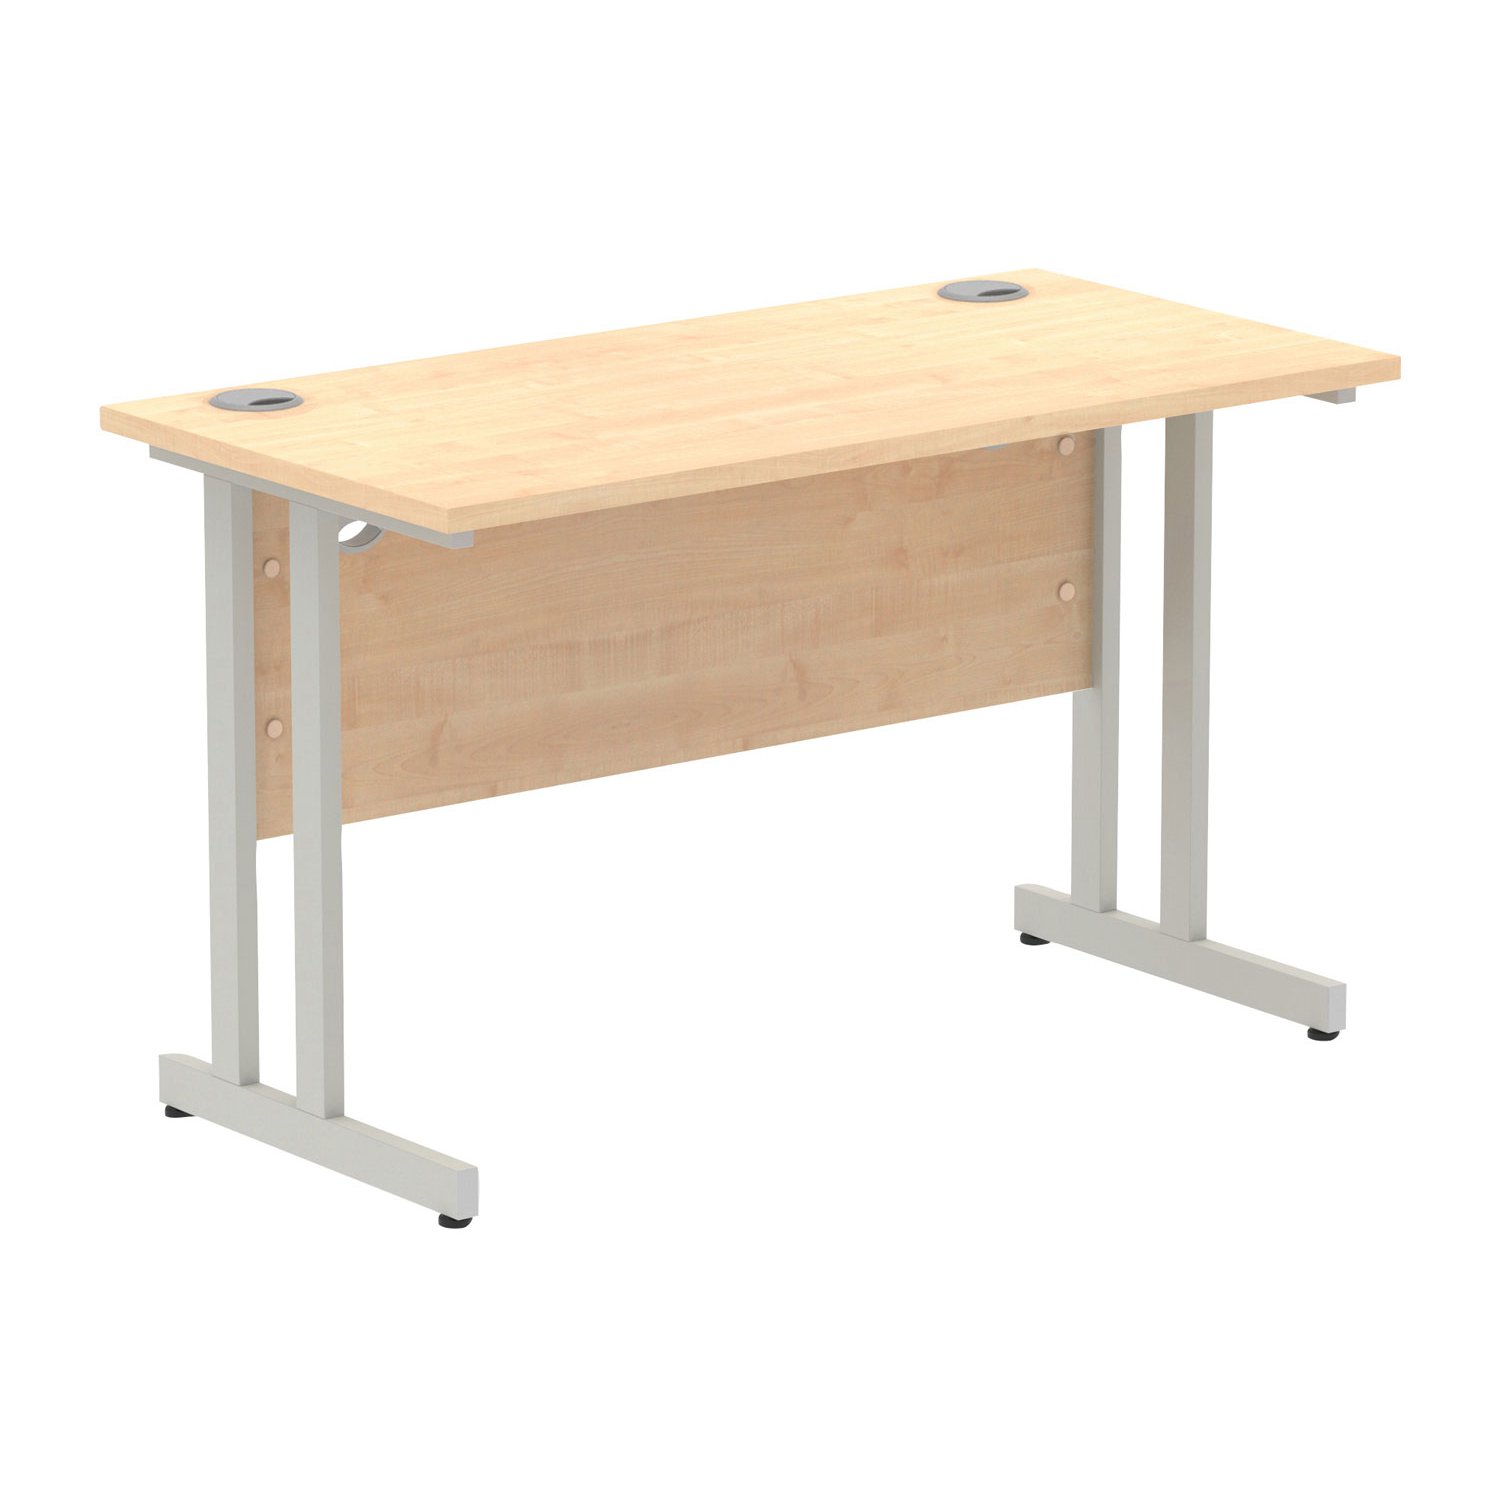 Vitali C-Leg Narrow Rectangular Desk (Silver Legs), 120wx60dx73h (cm), Maple